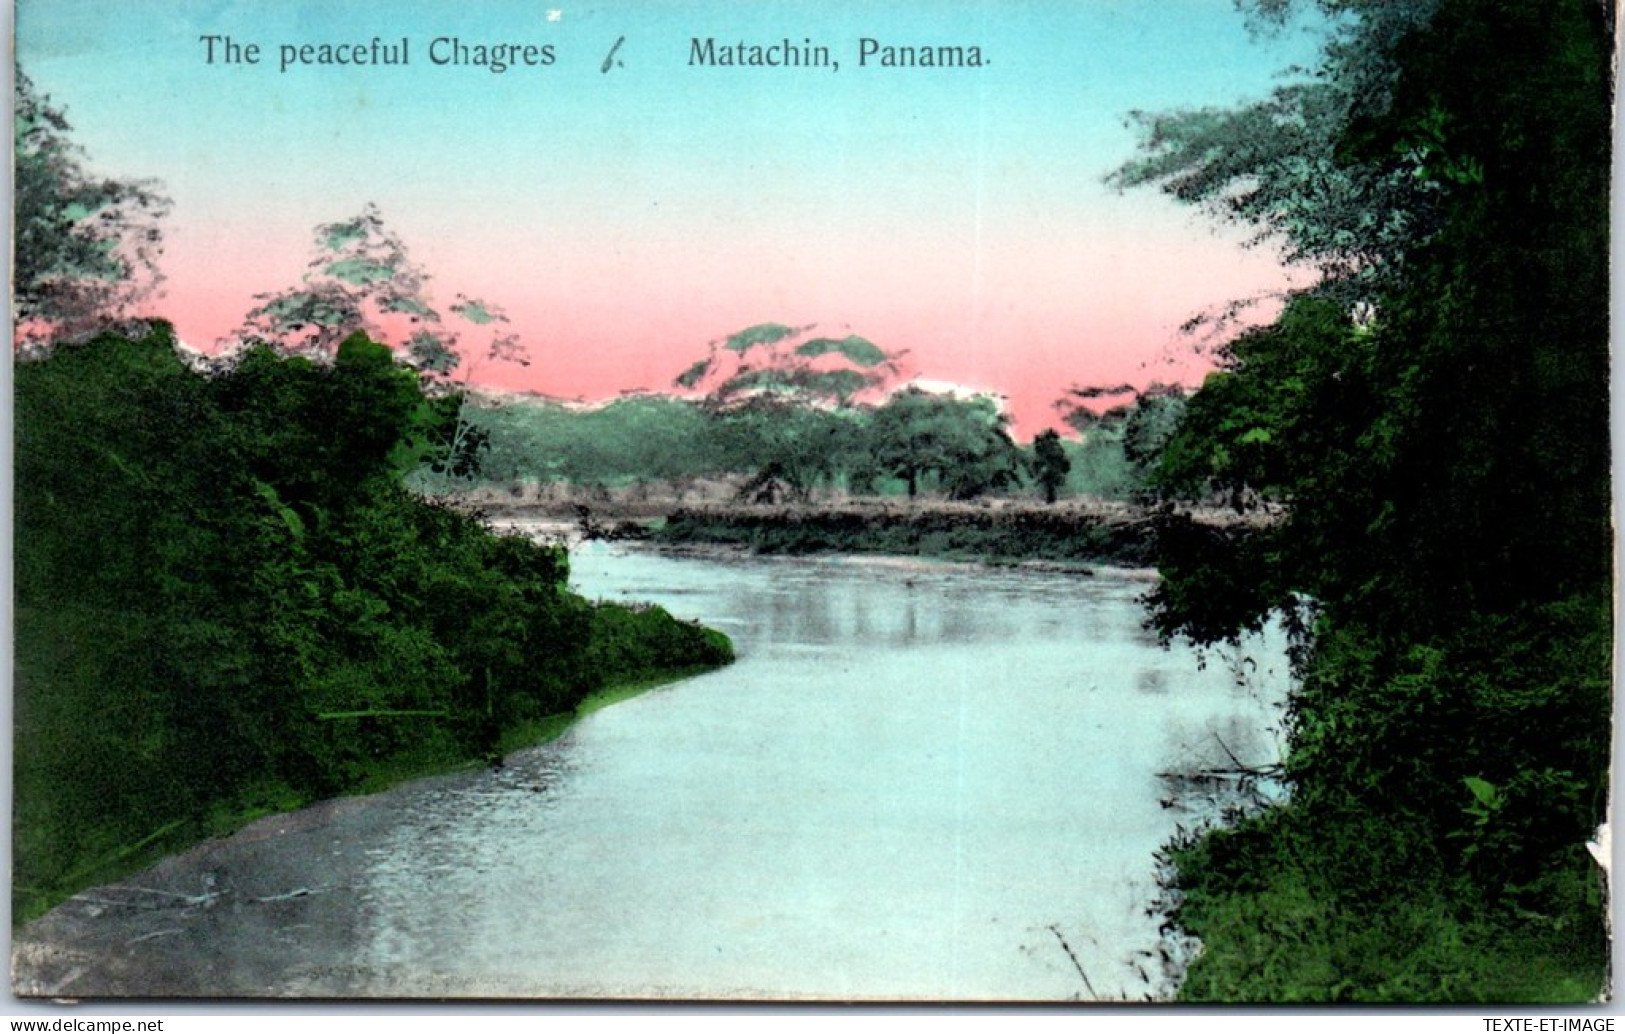 PANAMA - The Peaceful Chagres, Matachin Panama - Panama